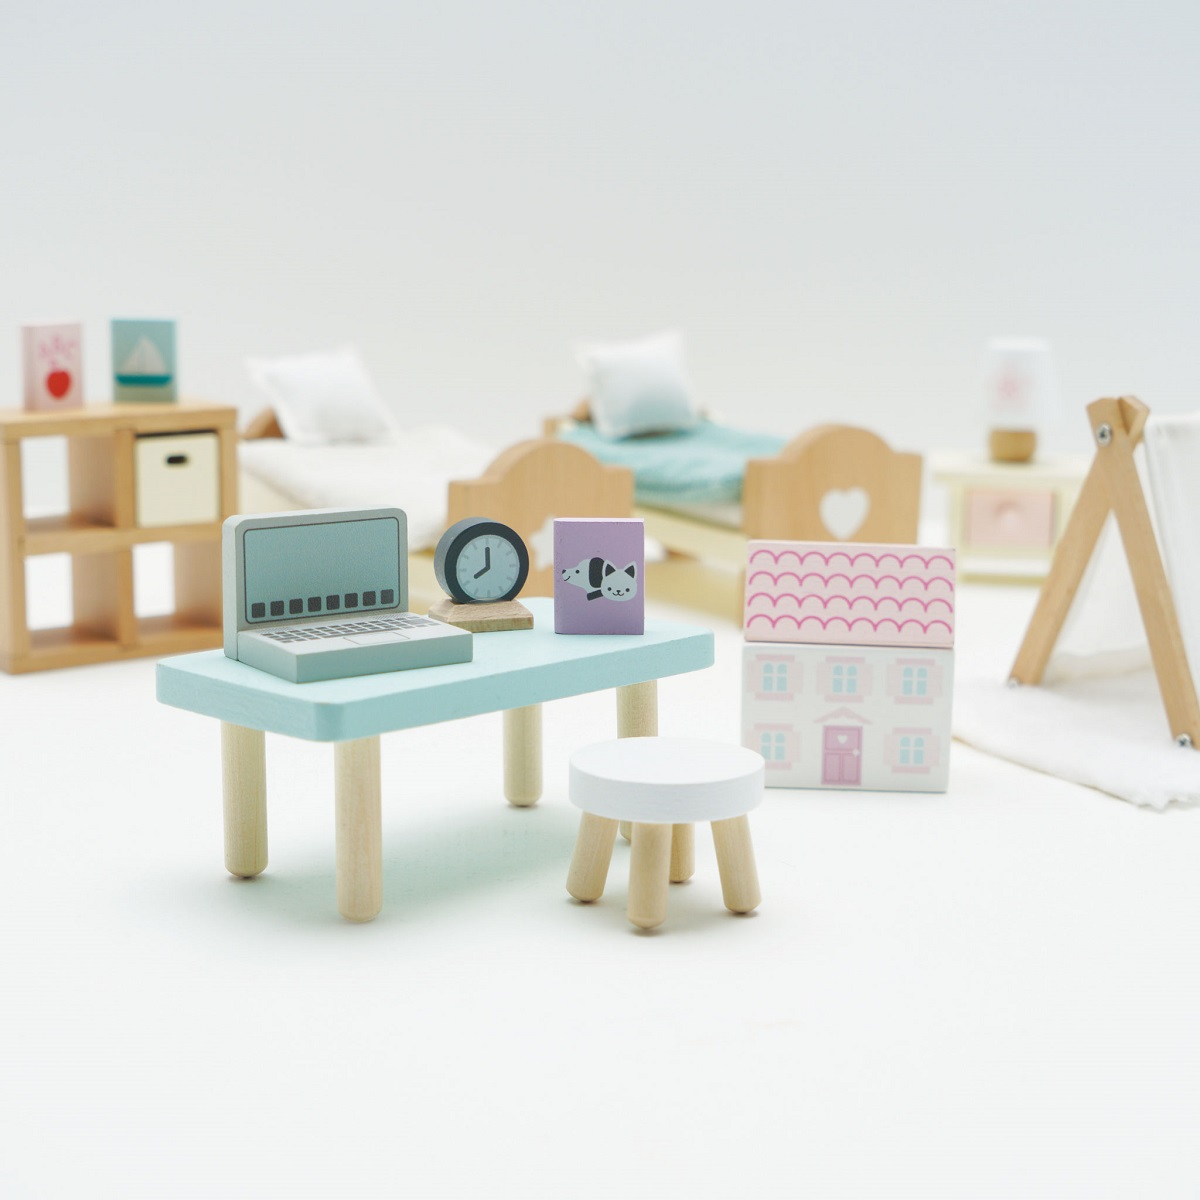 Doll House Furniture - Children's Bedroom